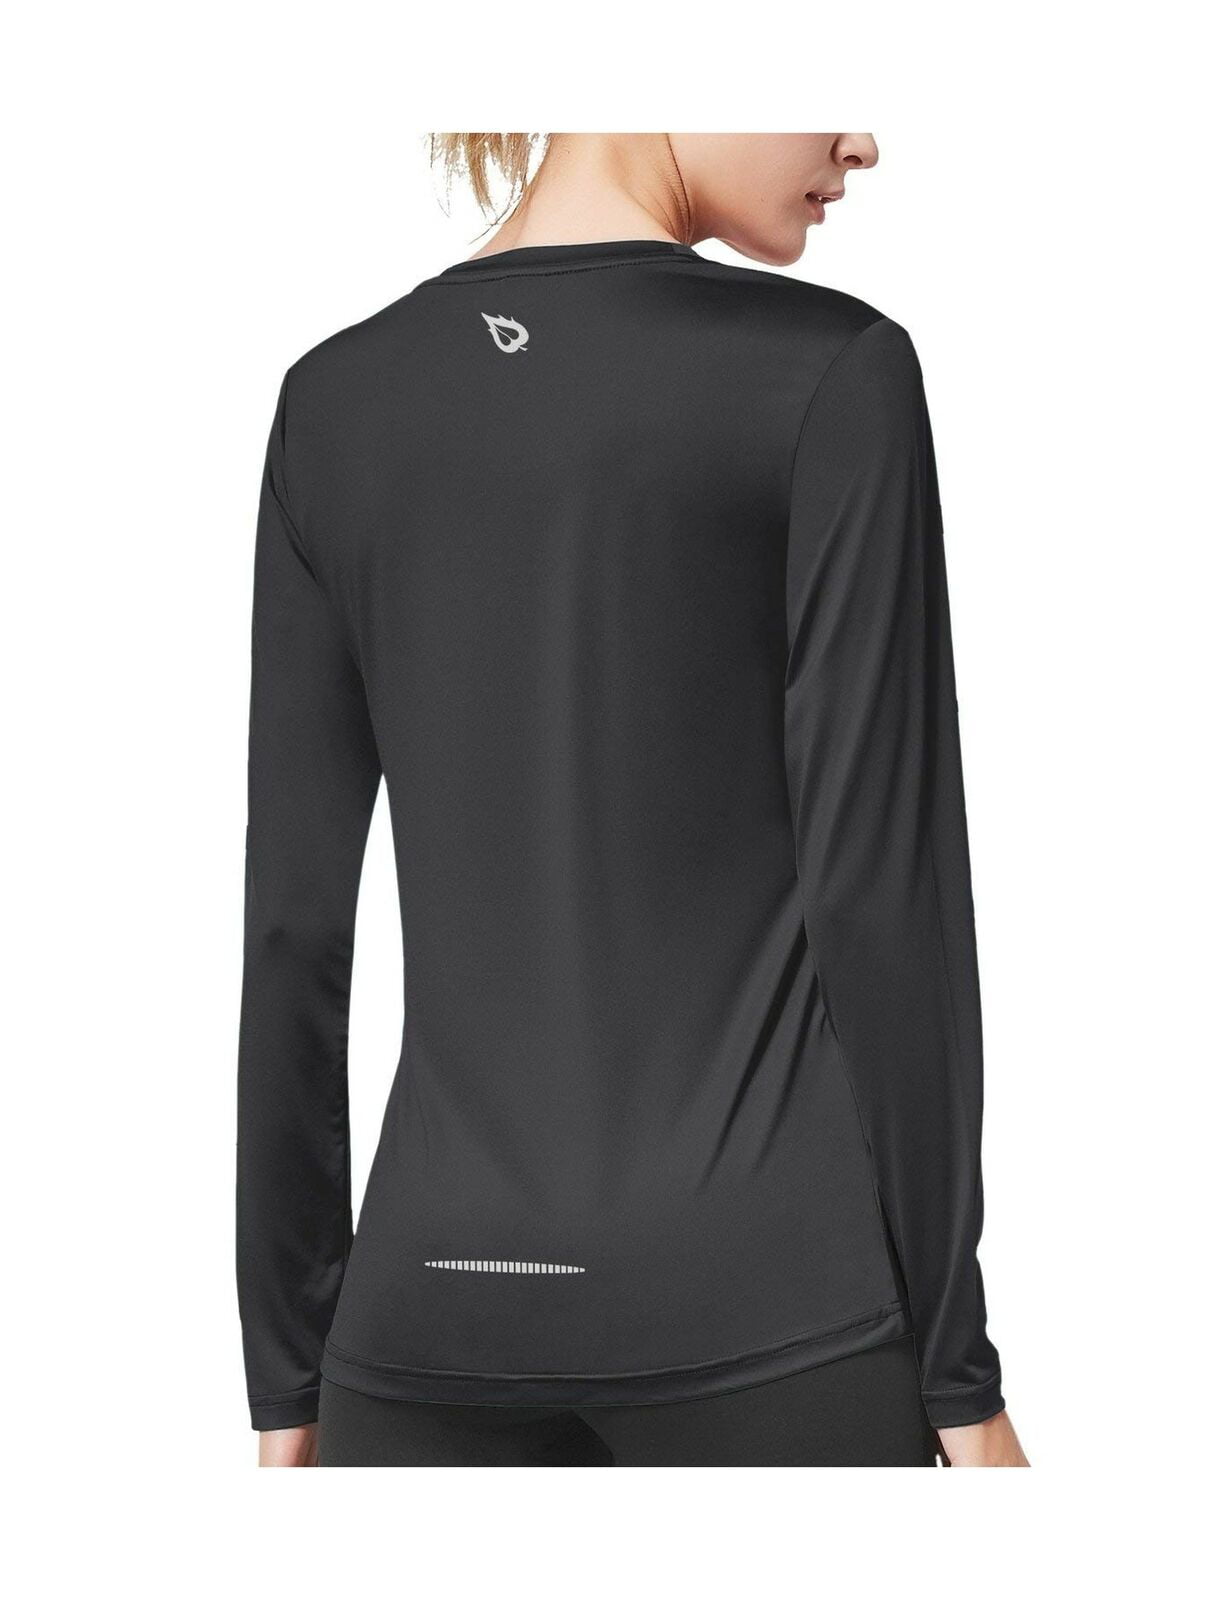 BALEAF Women's Workout Shirts V-Neck Short Sleeve Summer Quick Dry Activewear Performance Tee Running Yoga Top